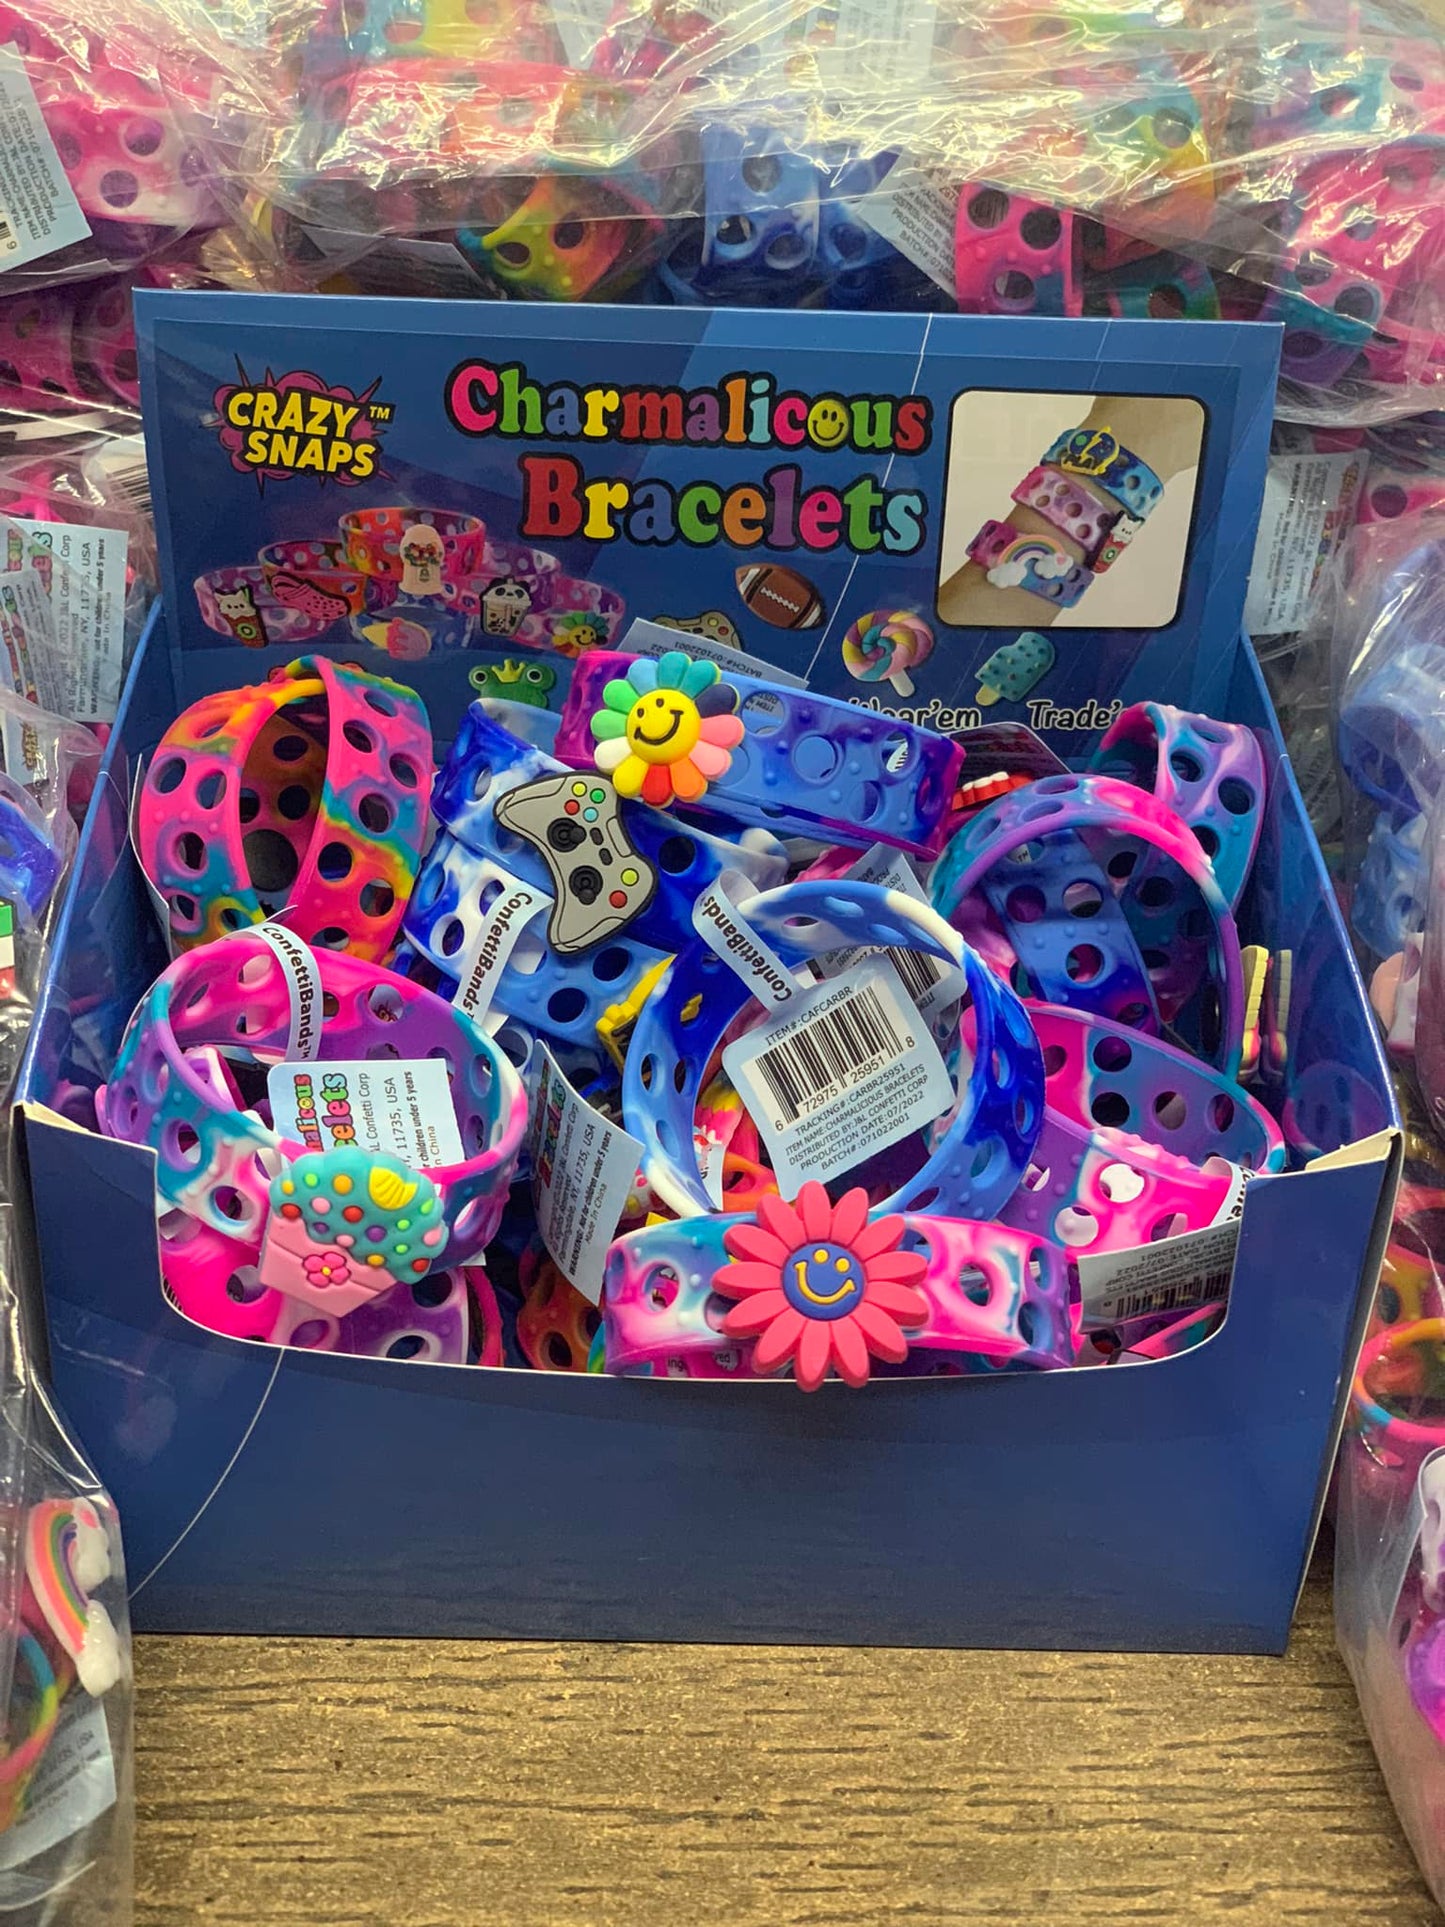 Charmalicious Bracelets